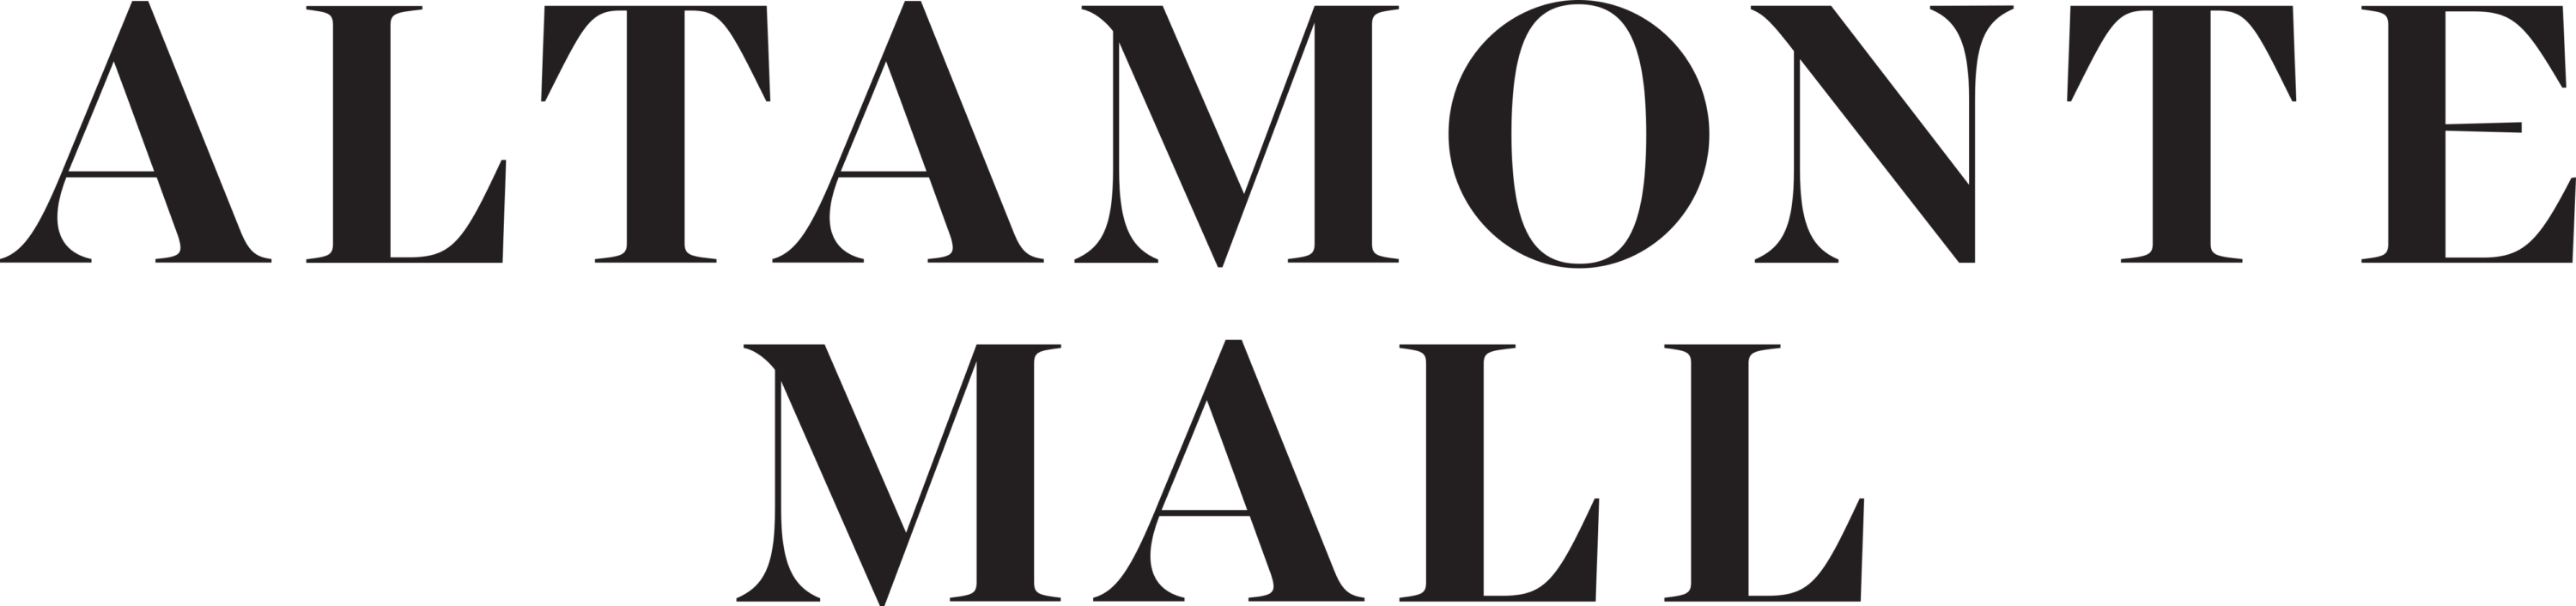 Altamonte Mall Logo